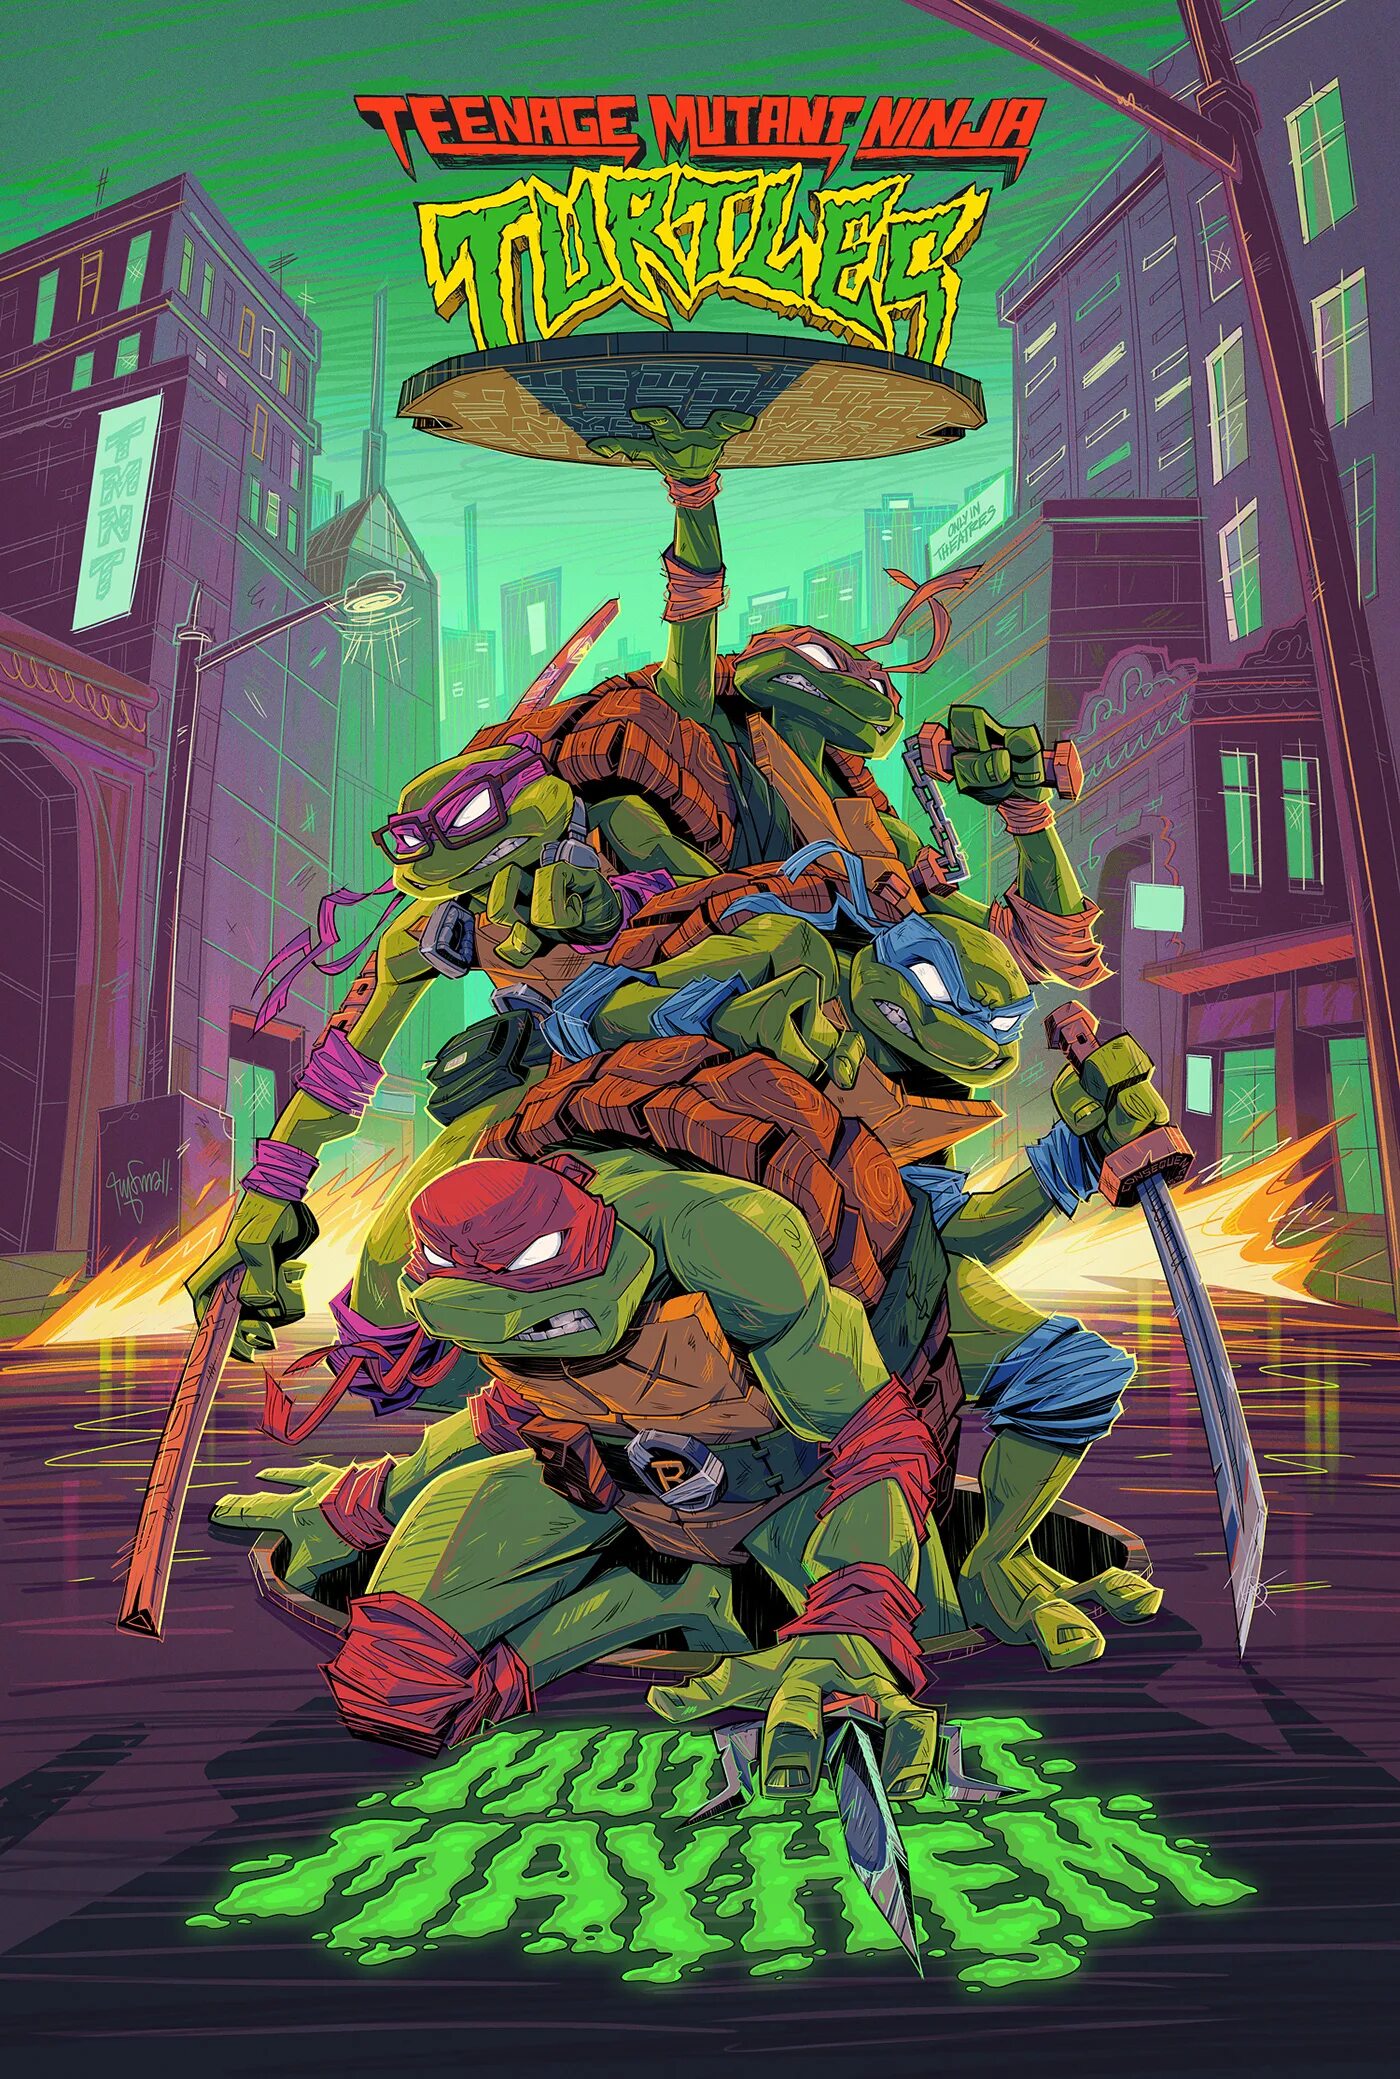 Teenage Mutant Ninja Turtles: Mutant Mayhem 2023. Черепашки ниндзя погром мутантов 2023. Черепашки ниндзя погром мутантов Сплинтер. TMNT погром мутантов. Tmnt mayhem